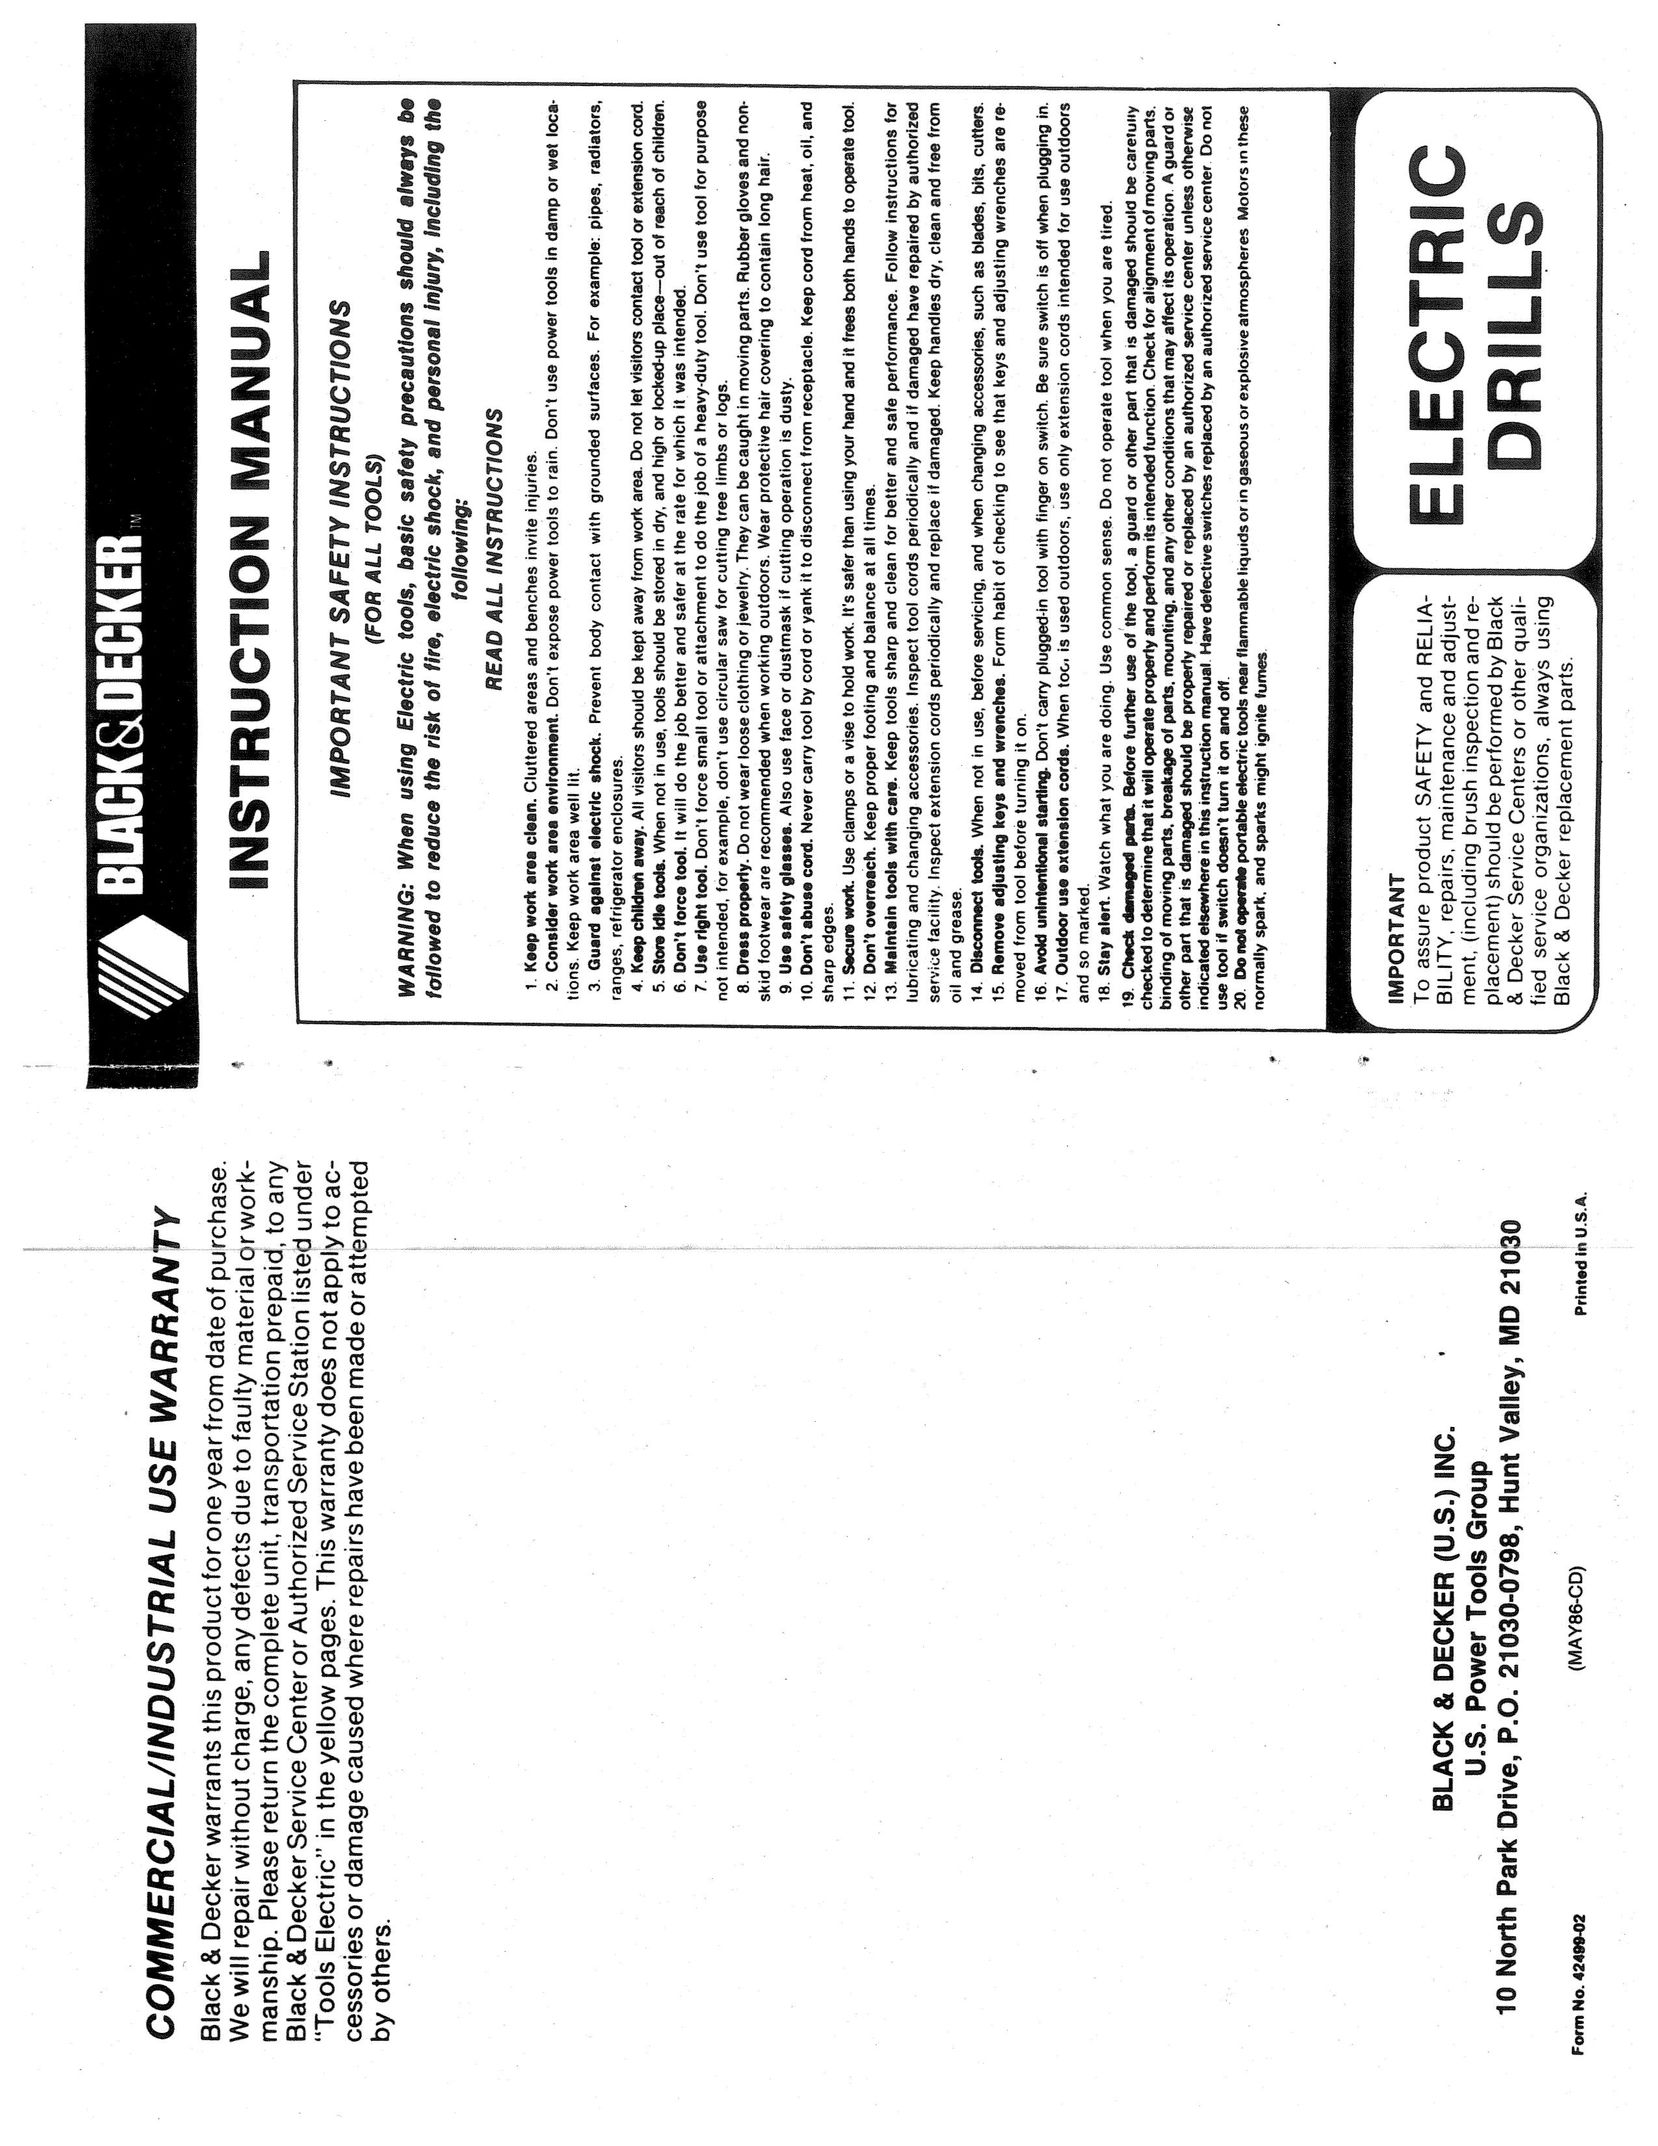 Black & Decker 42409-03 Drill User Manual